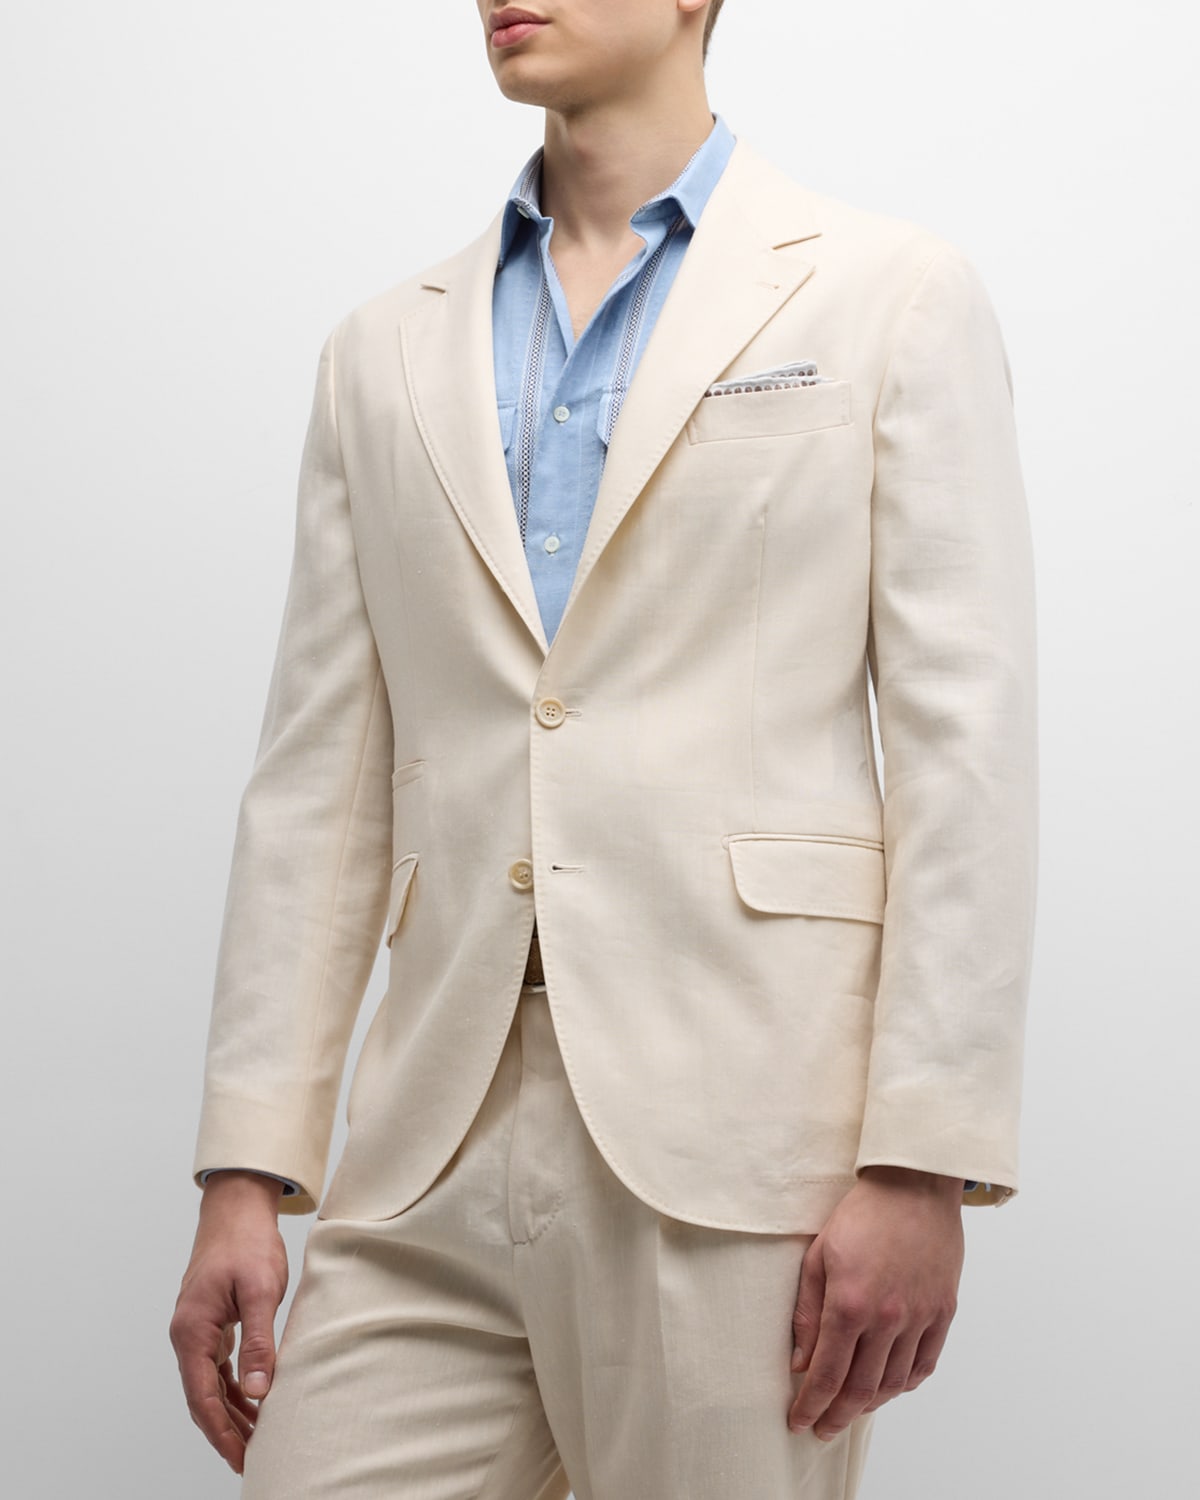 Men's Linen and Wool Solid Suit